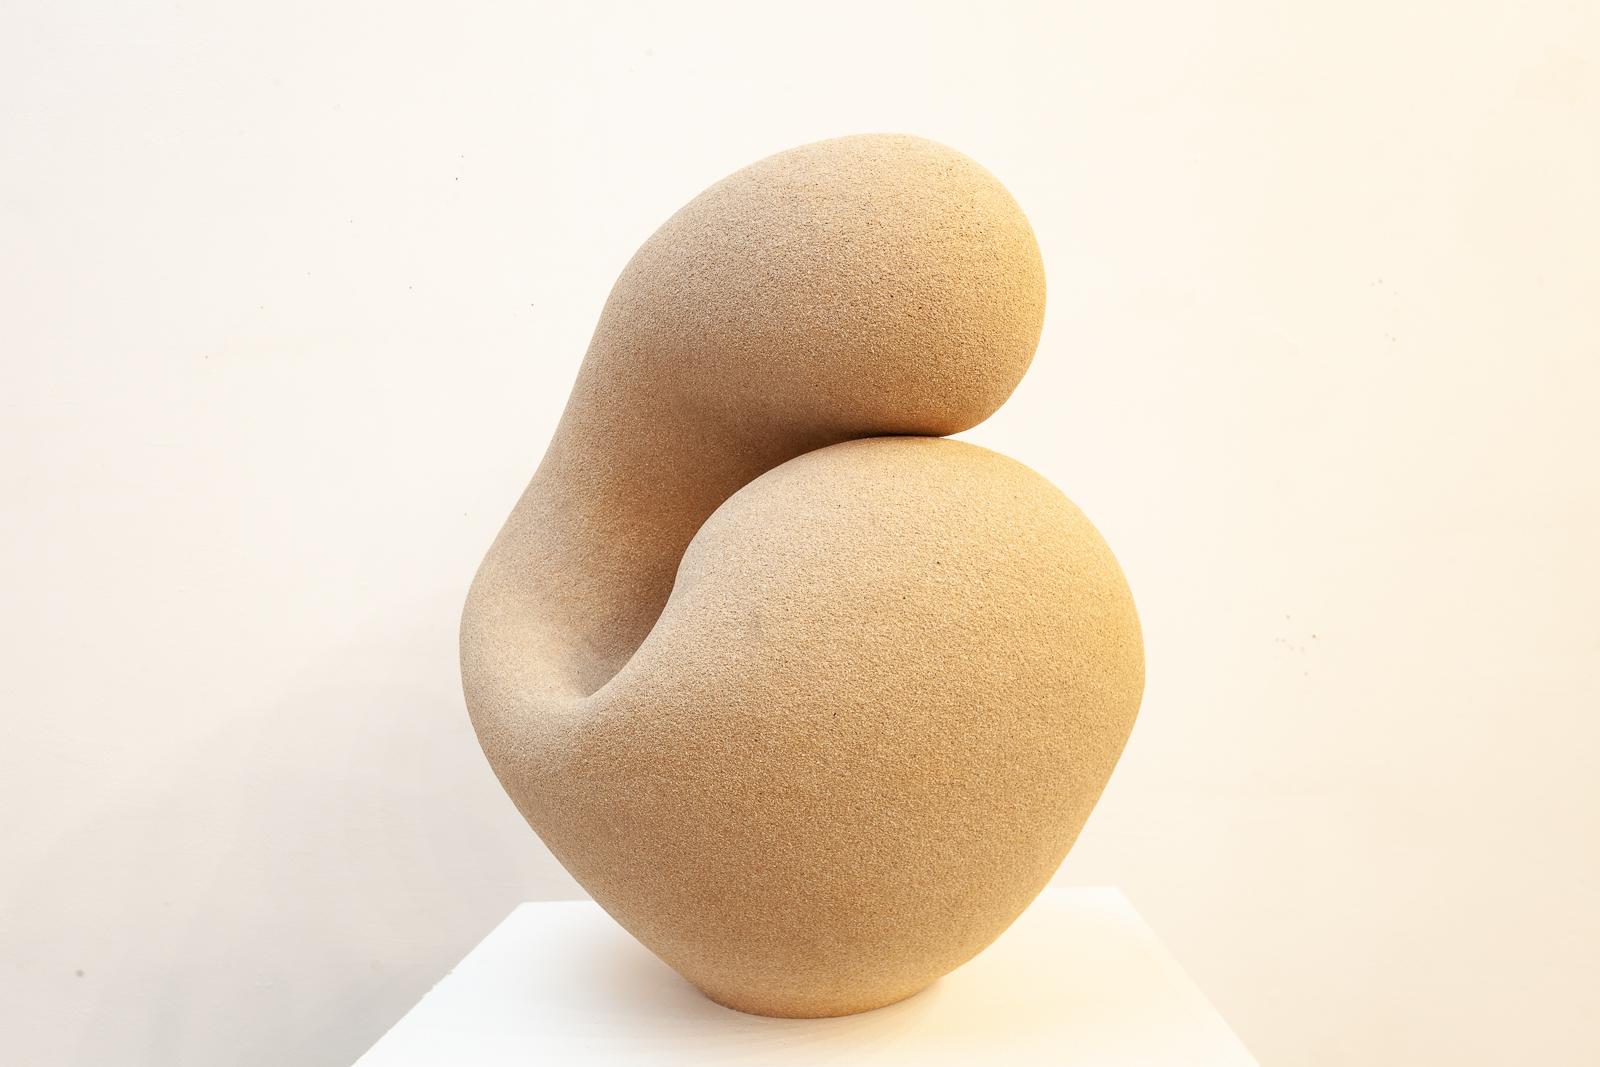 Kiss - Sculpture by Alison McGechie